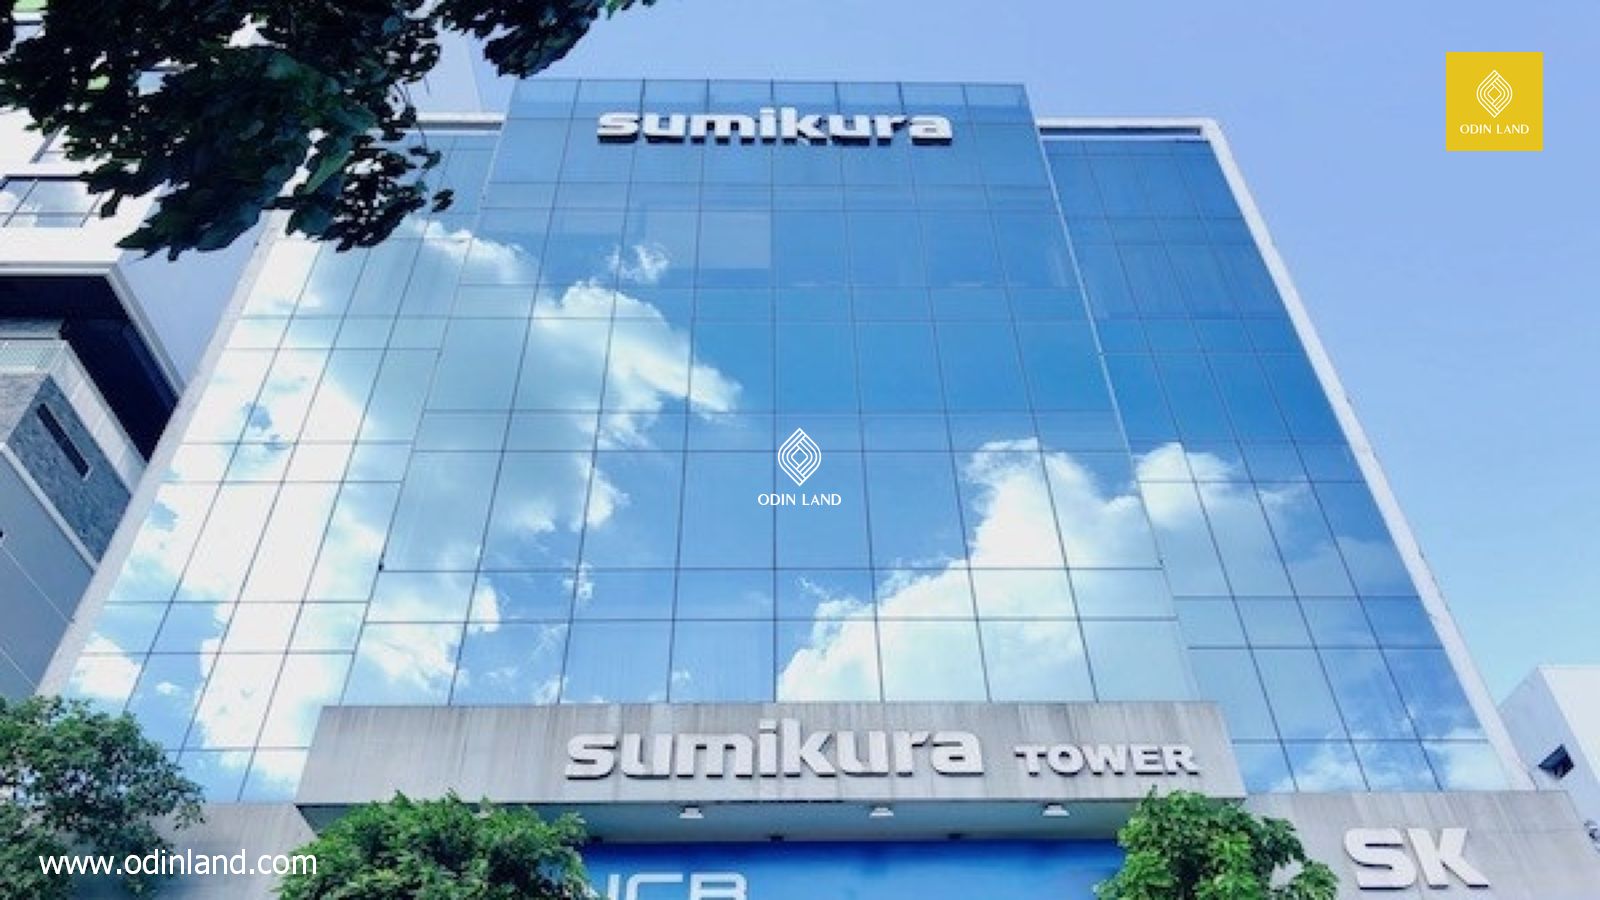 Sumikura Tower Building